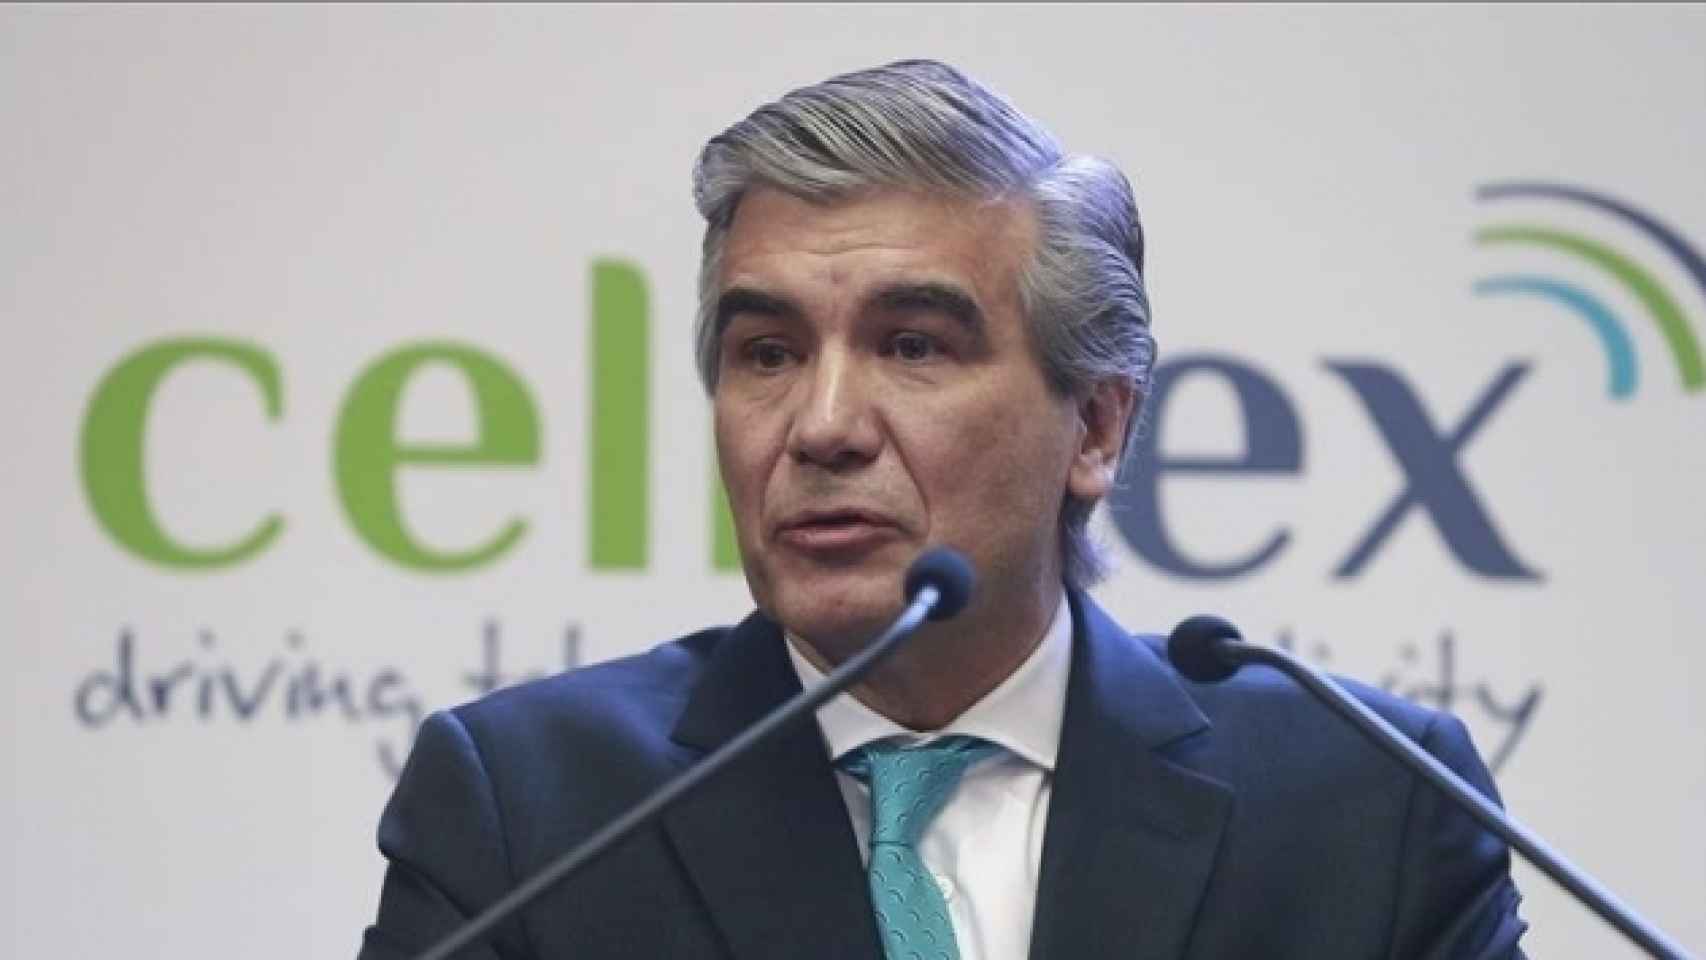 Francisco Reynés, presidente de Cellnex y consejero delegado de Abertis.